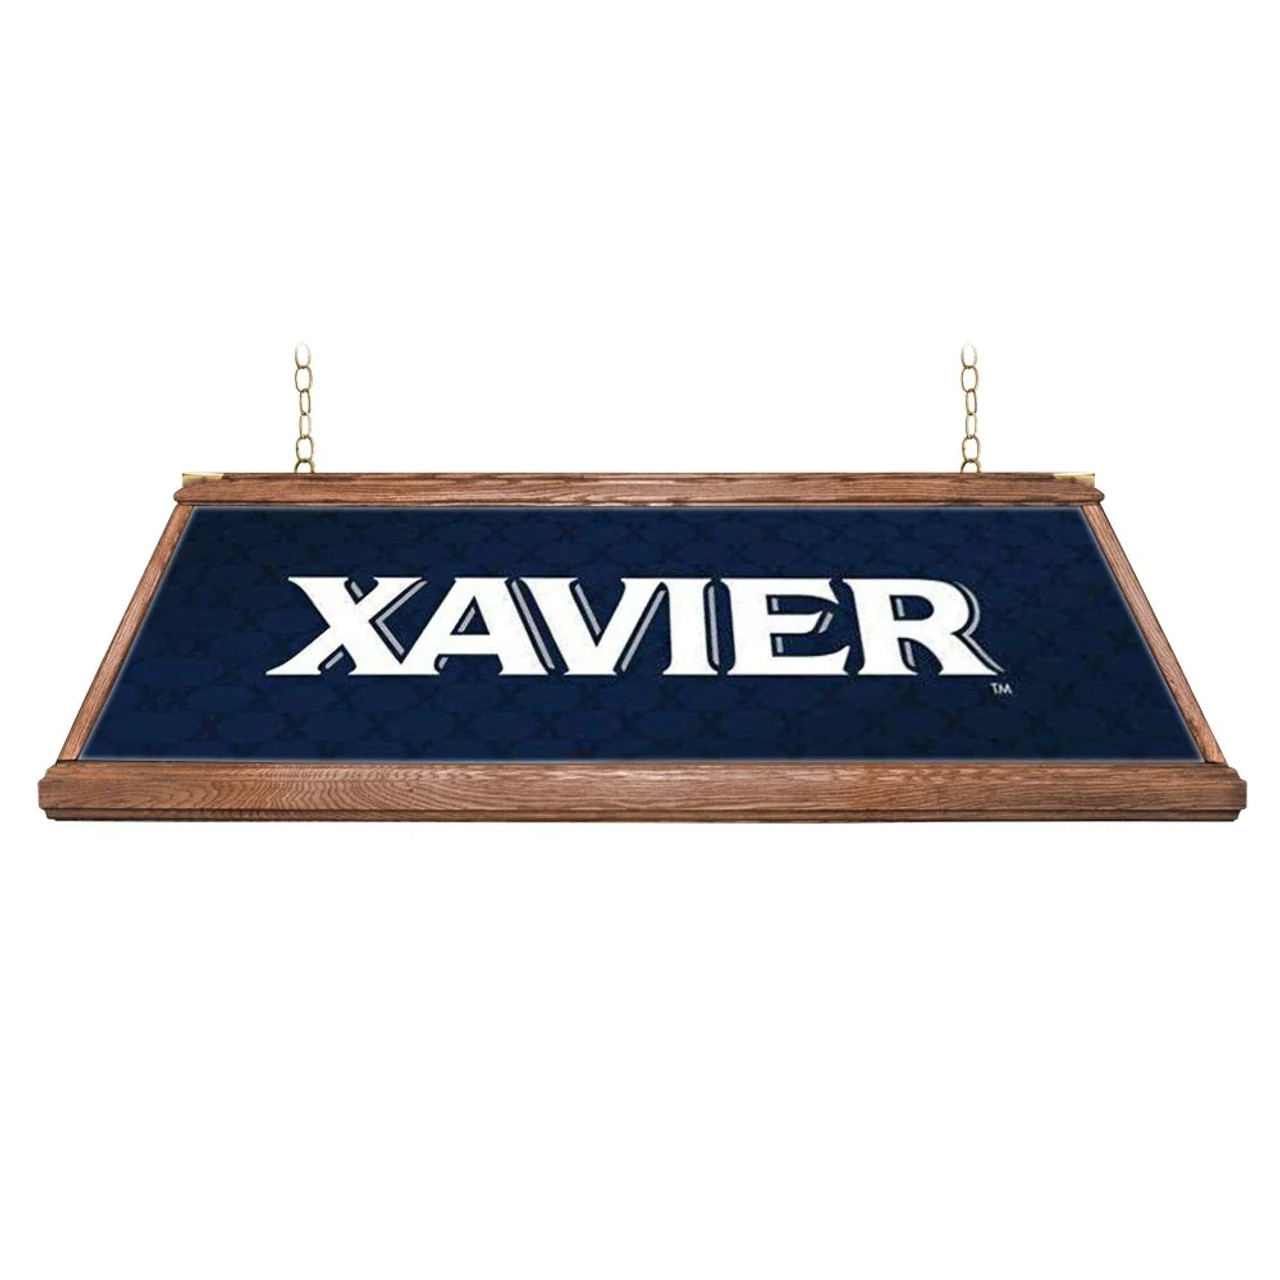 Xavier, XAV, Musketeers, Premium, Wood, Billiard, Pool, Table, Light, Lamp, NCXVRM-330-01A, NCXVRM-330-01B, The Fan-Brand, 686082105781